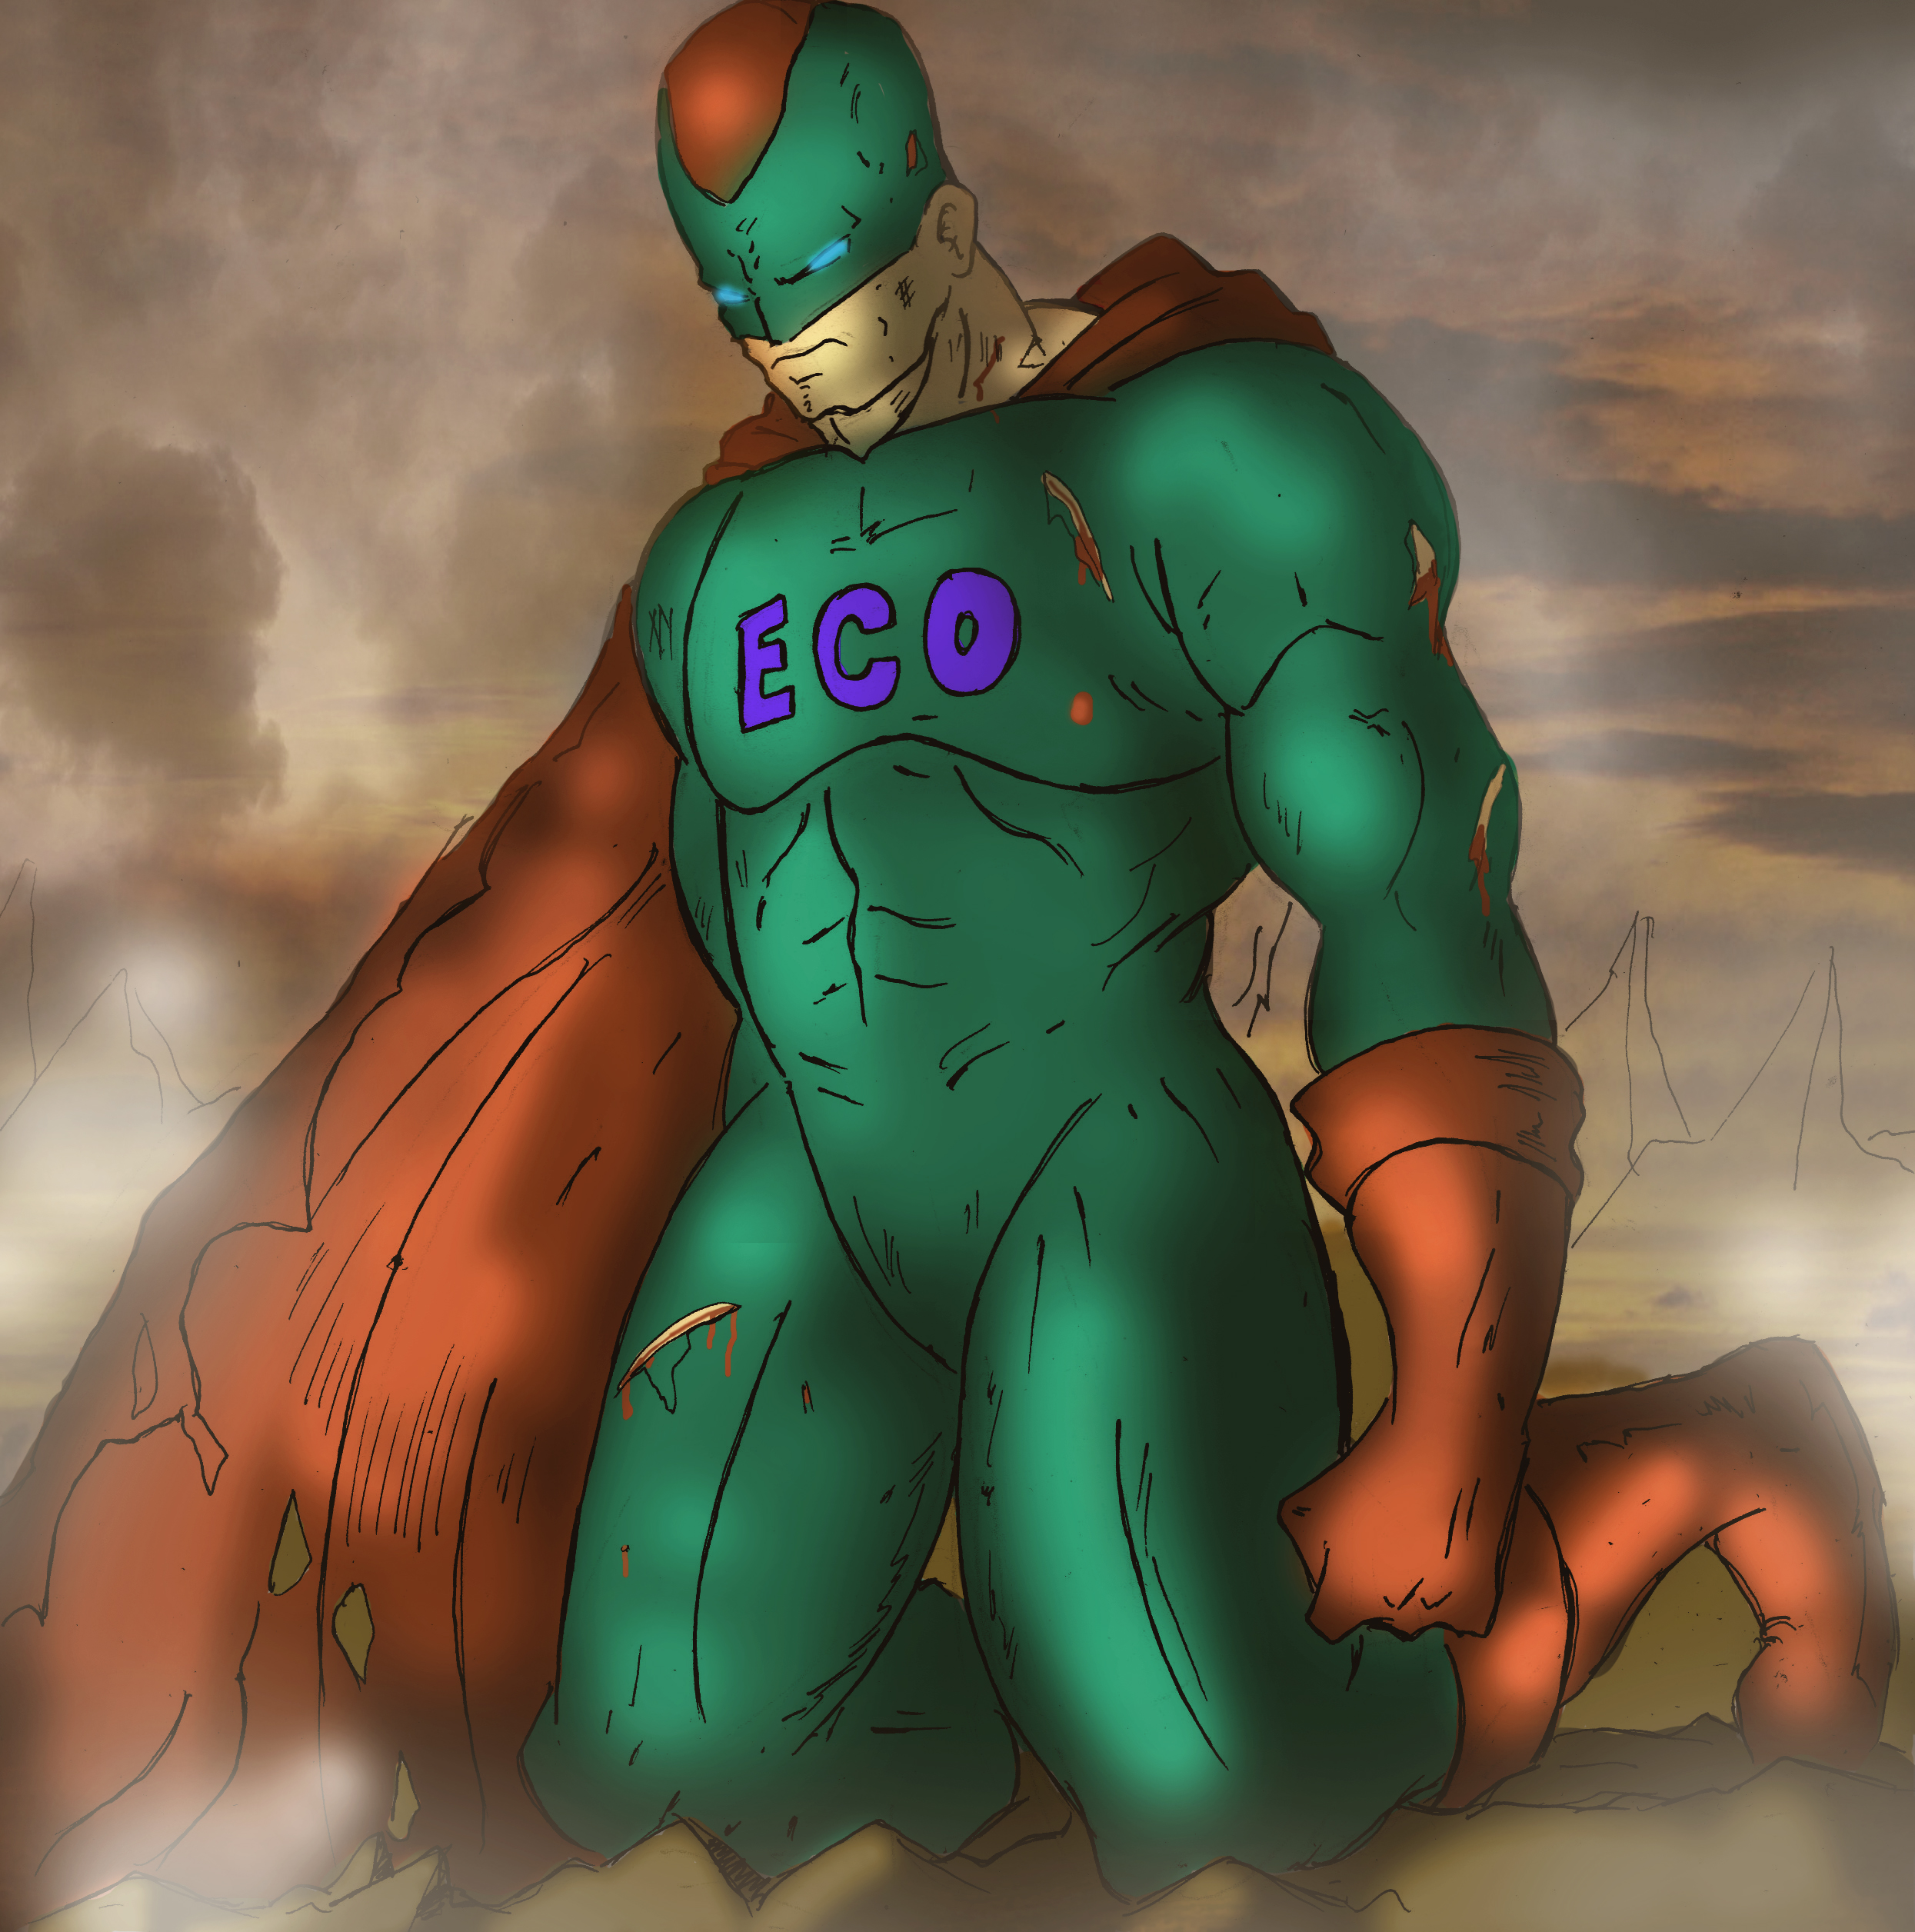 Green Eco superhero with orange cloak